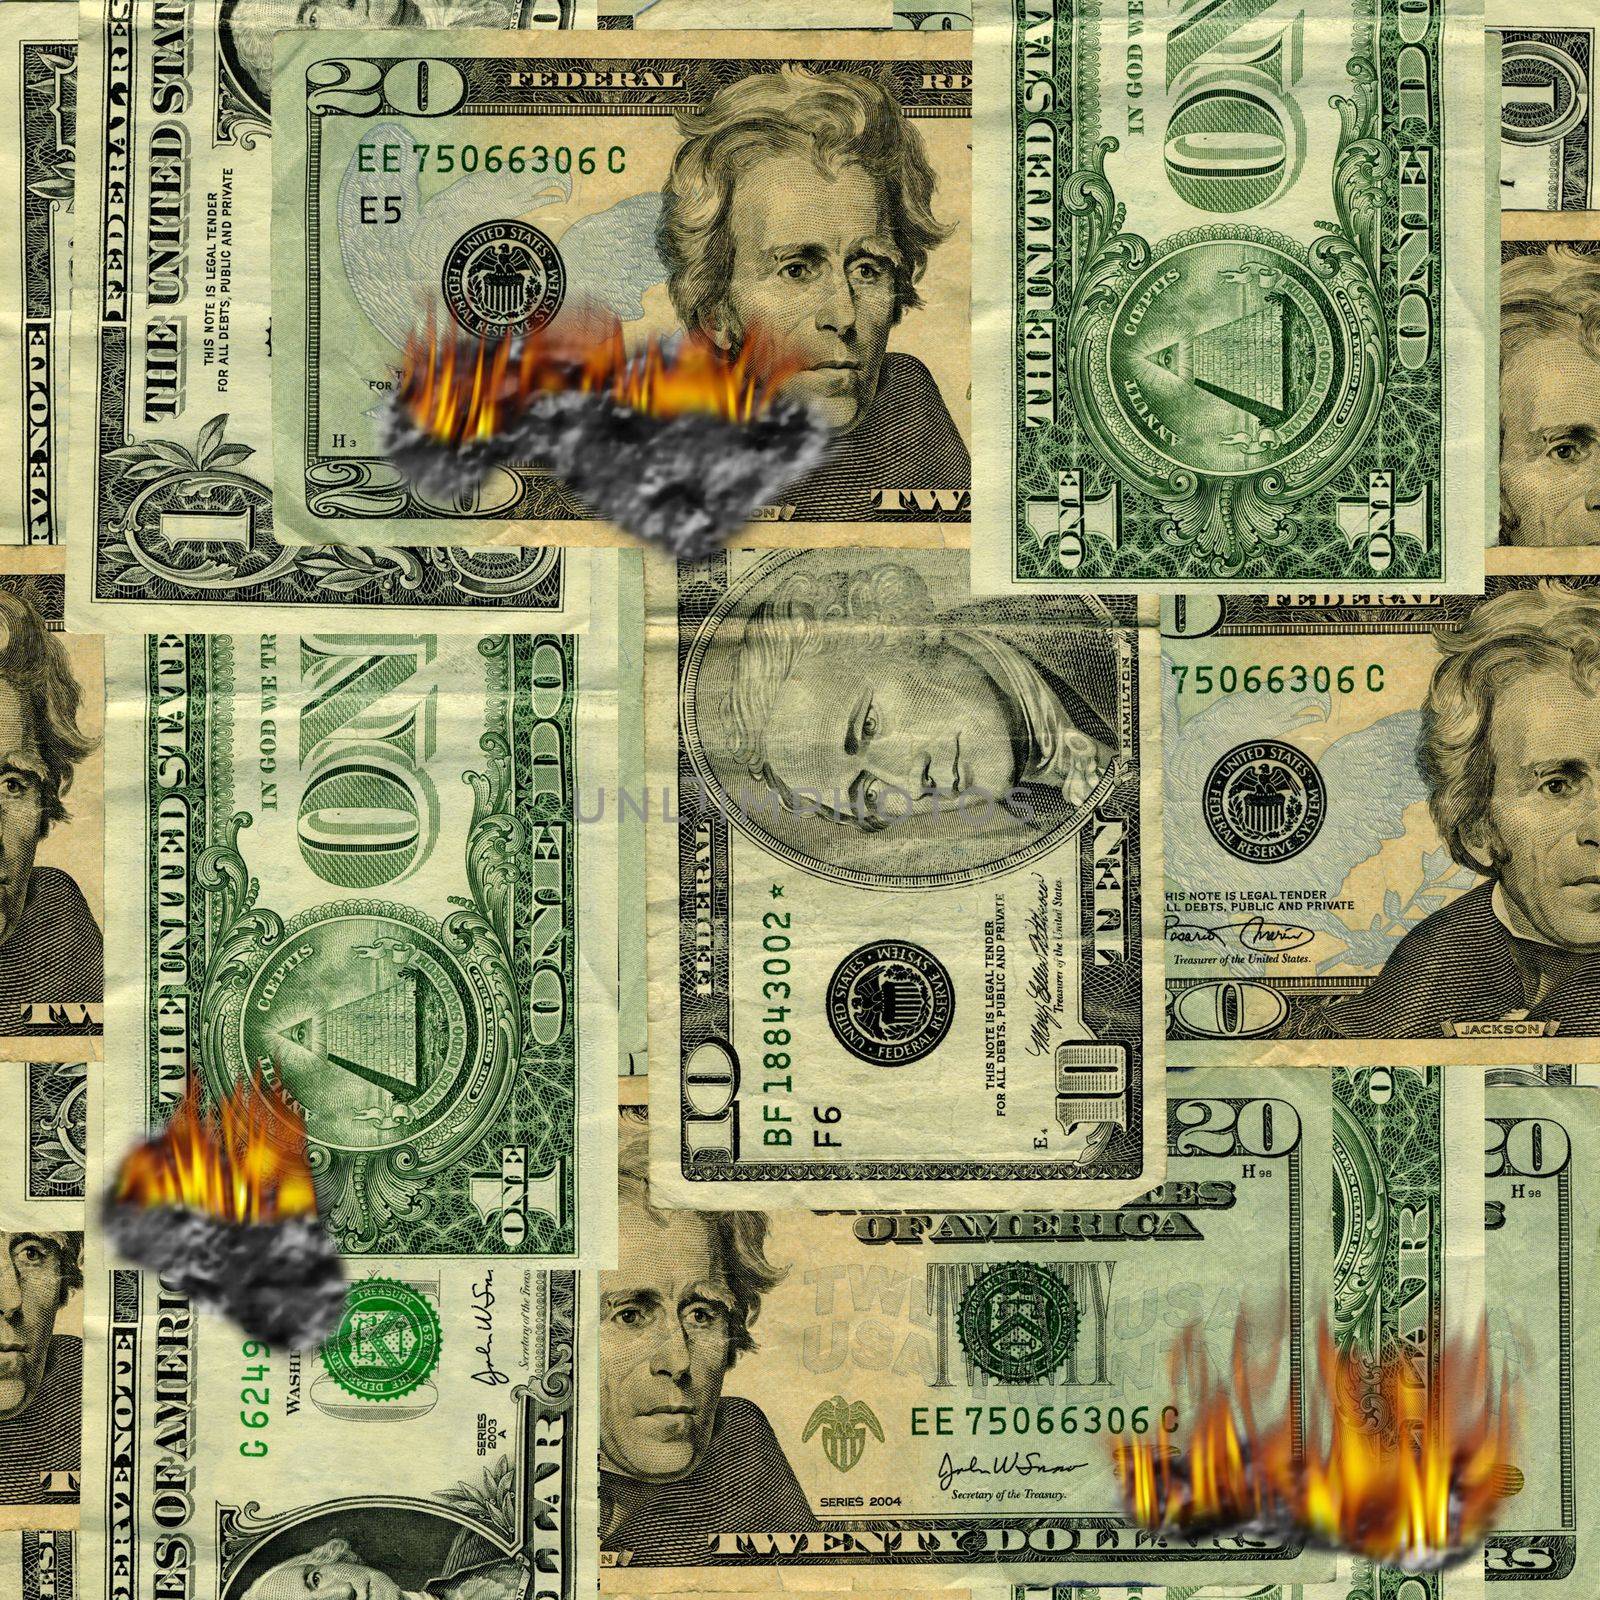 Burning Dollars by applesstock